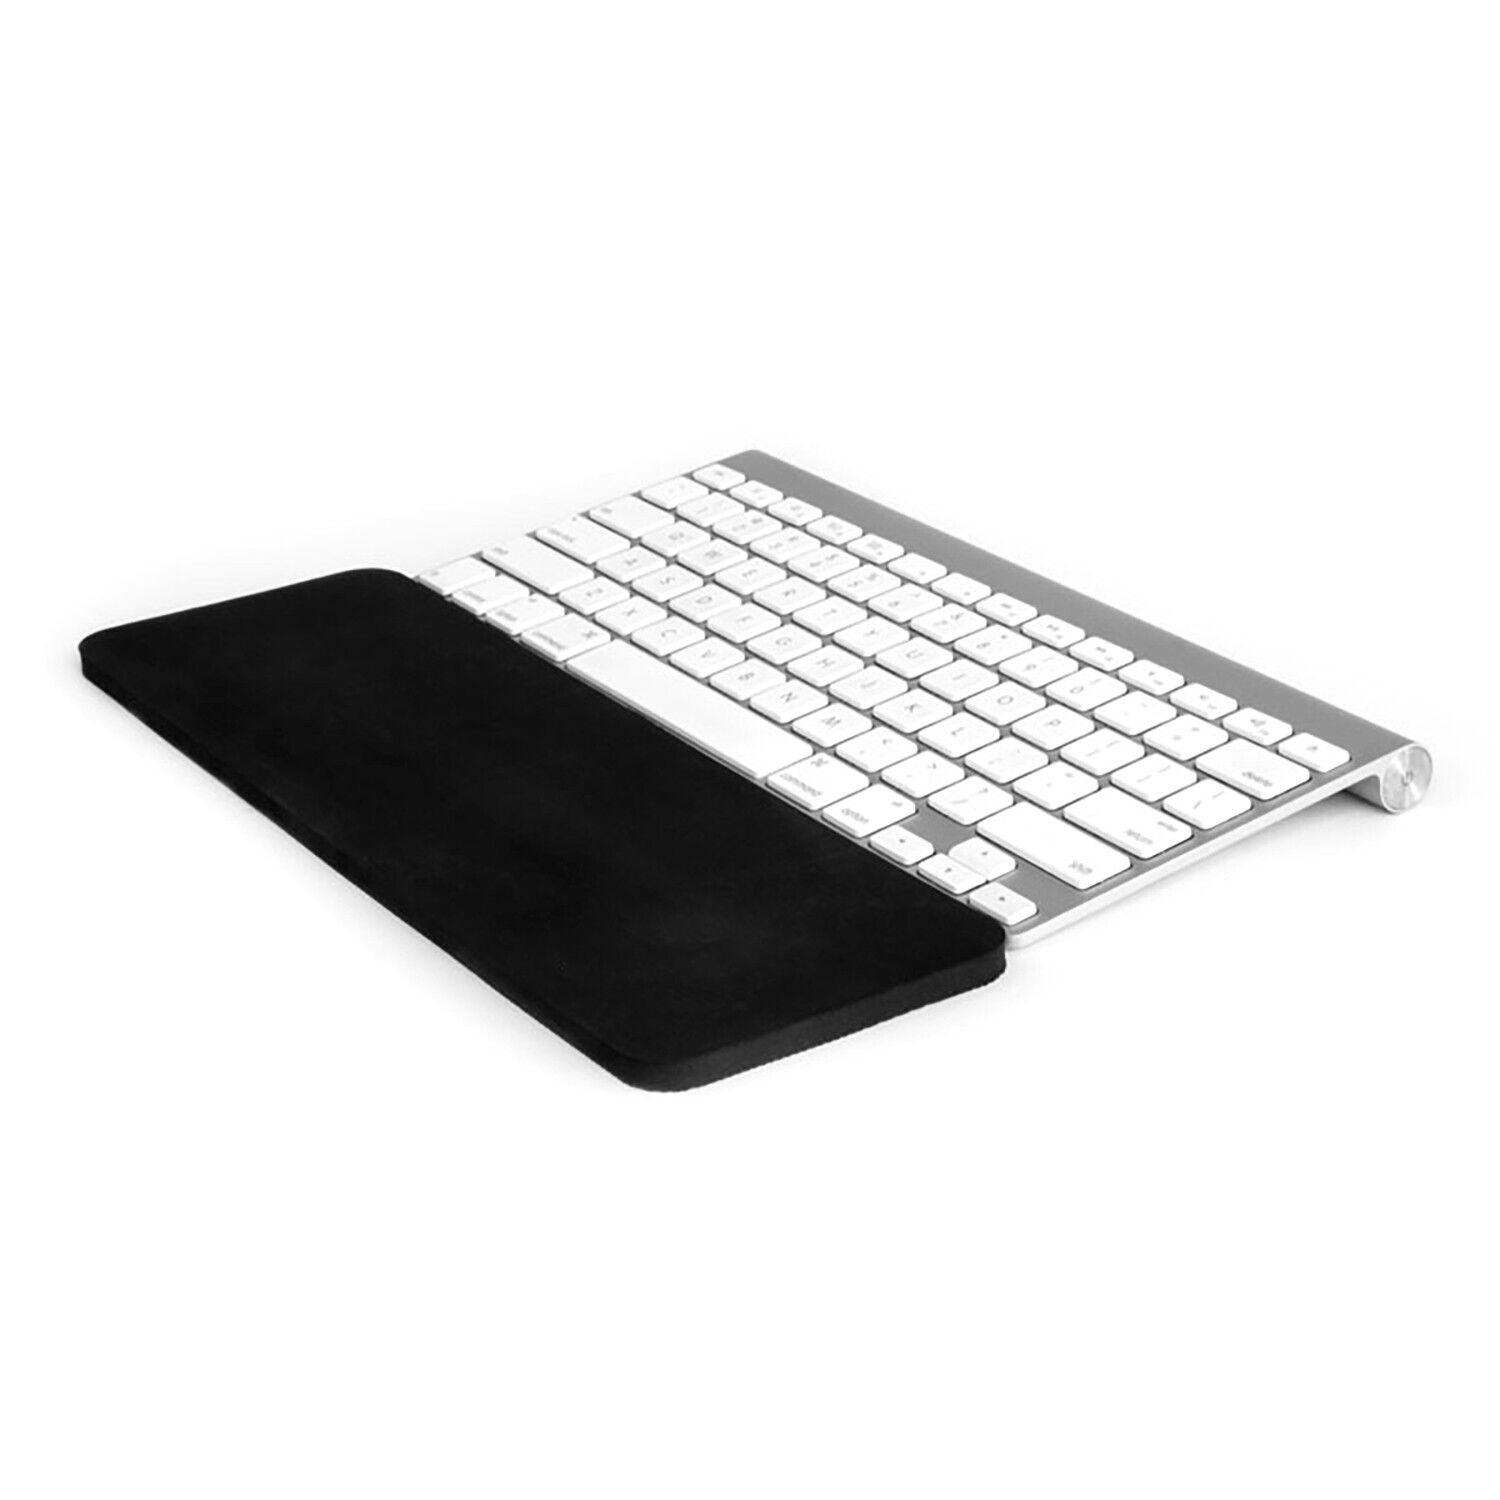 Grifiti SLIM Wrist Pad 12 x 4 X .25 Inch for Apple Wireless Slim Keyboard